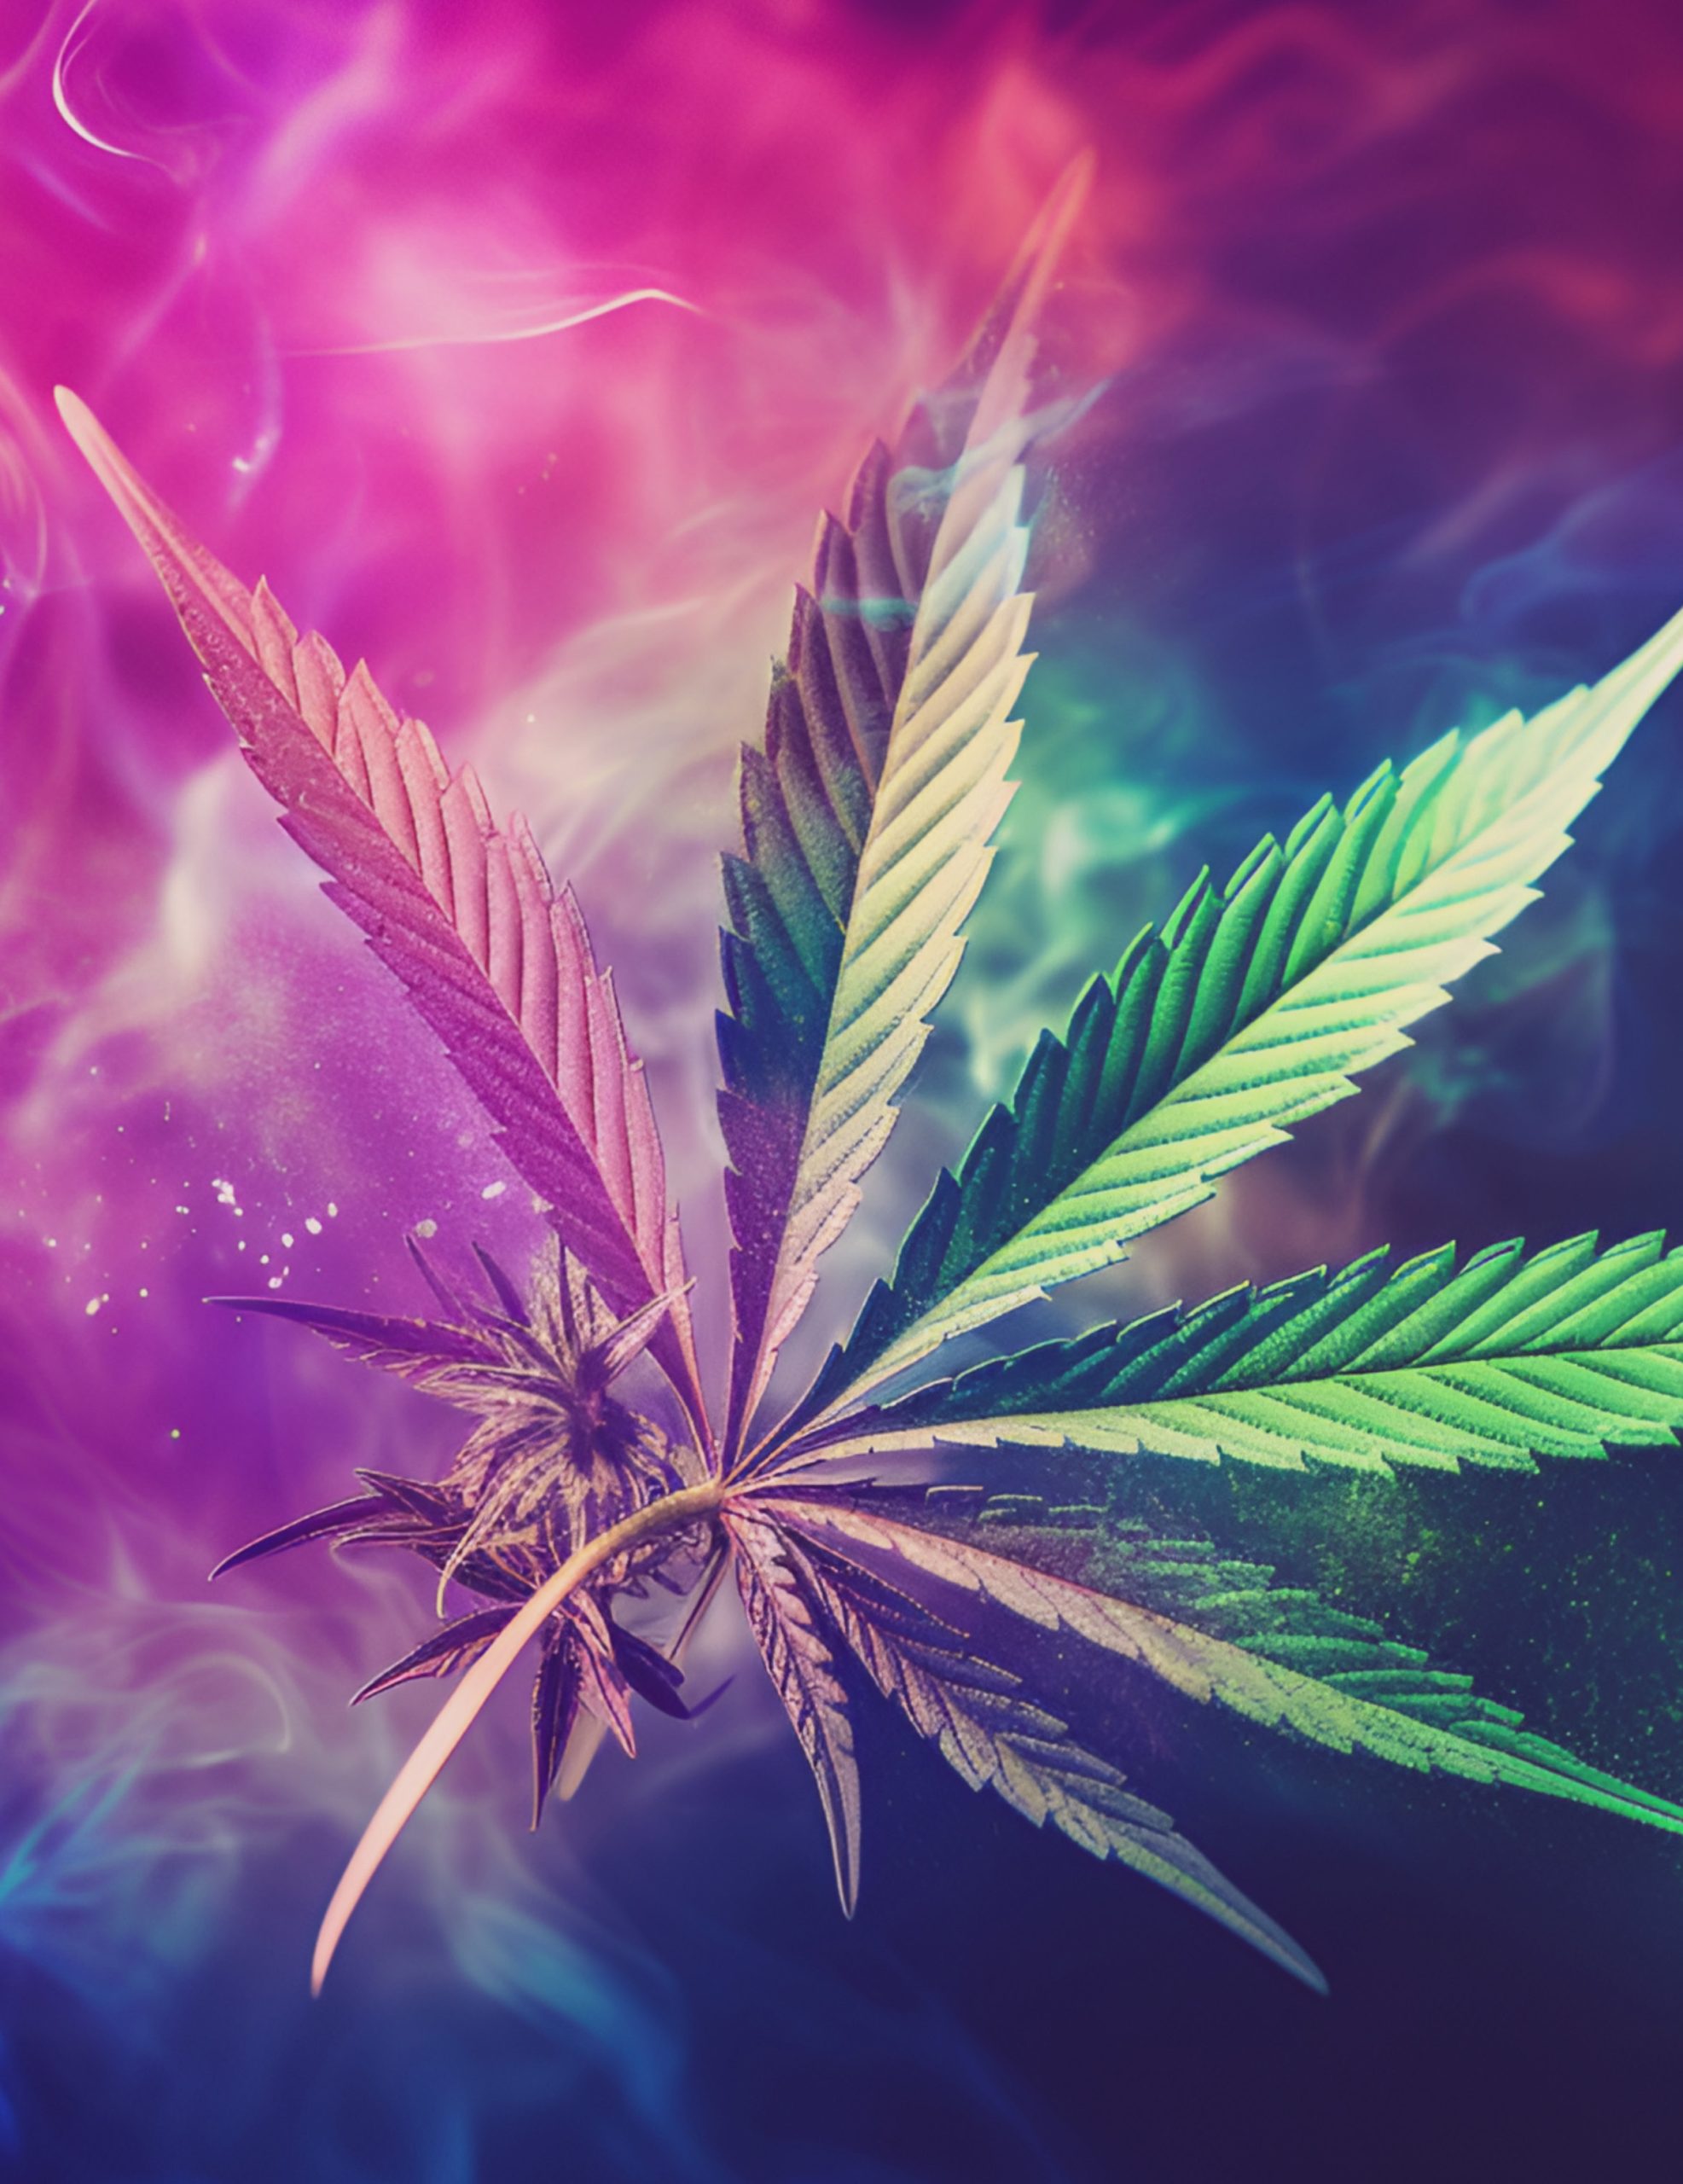 Cannabis plant image